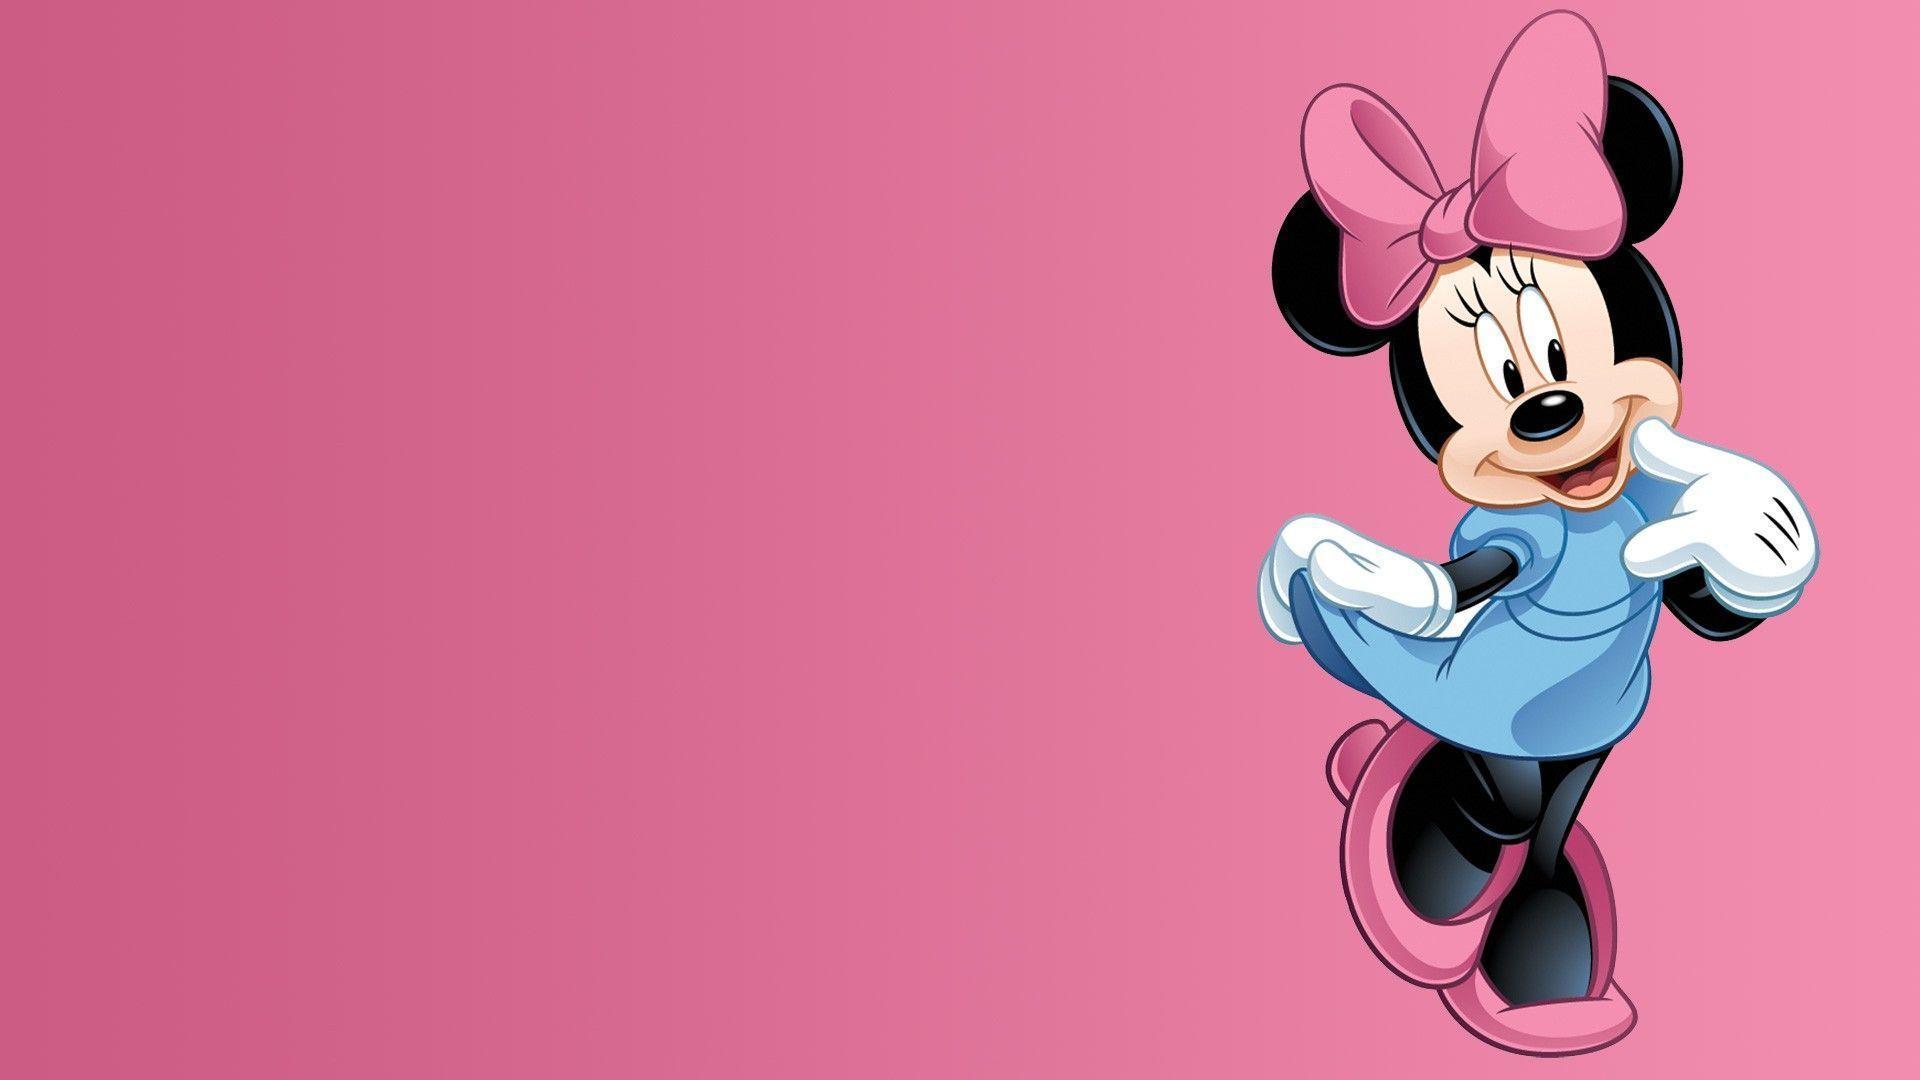 Minnie mouse wallpaper for desktop - Minnie Mouse